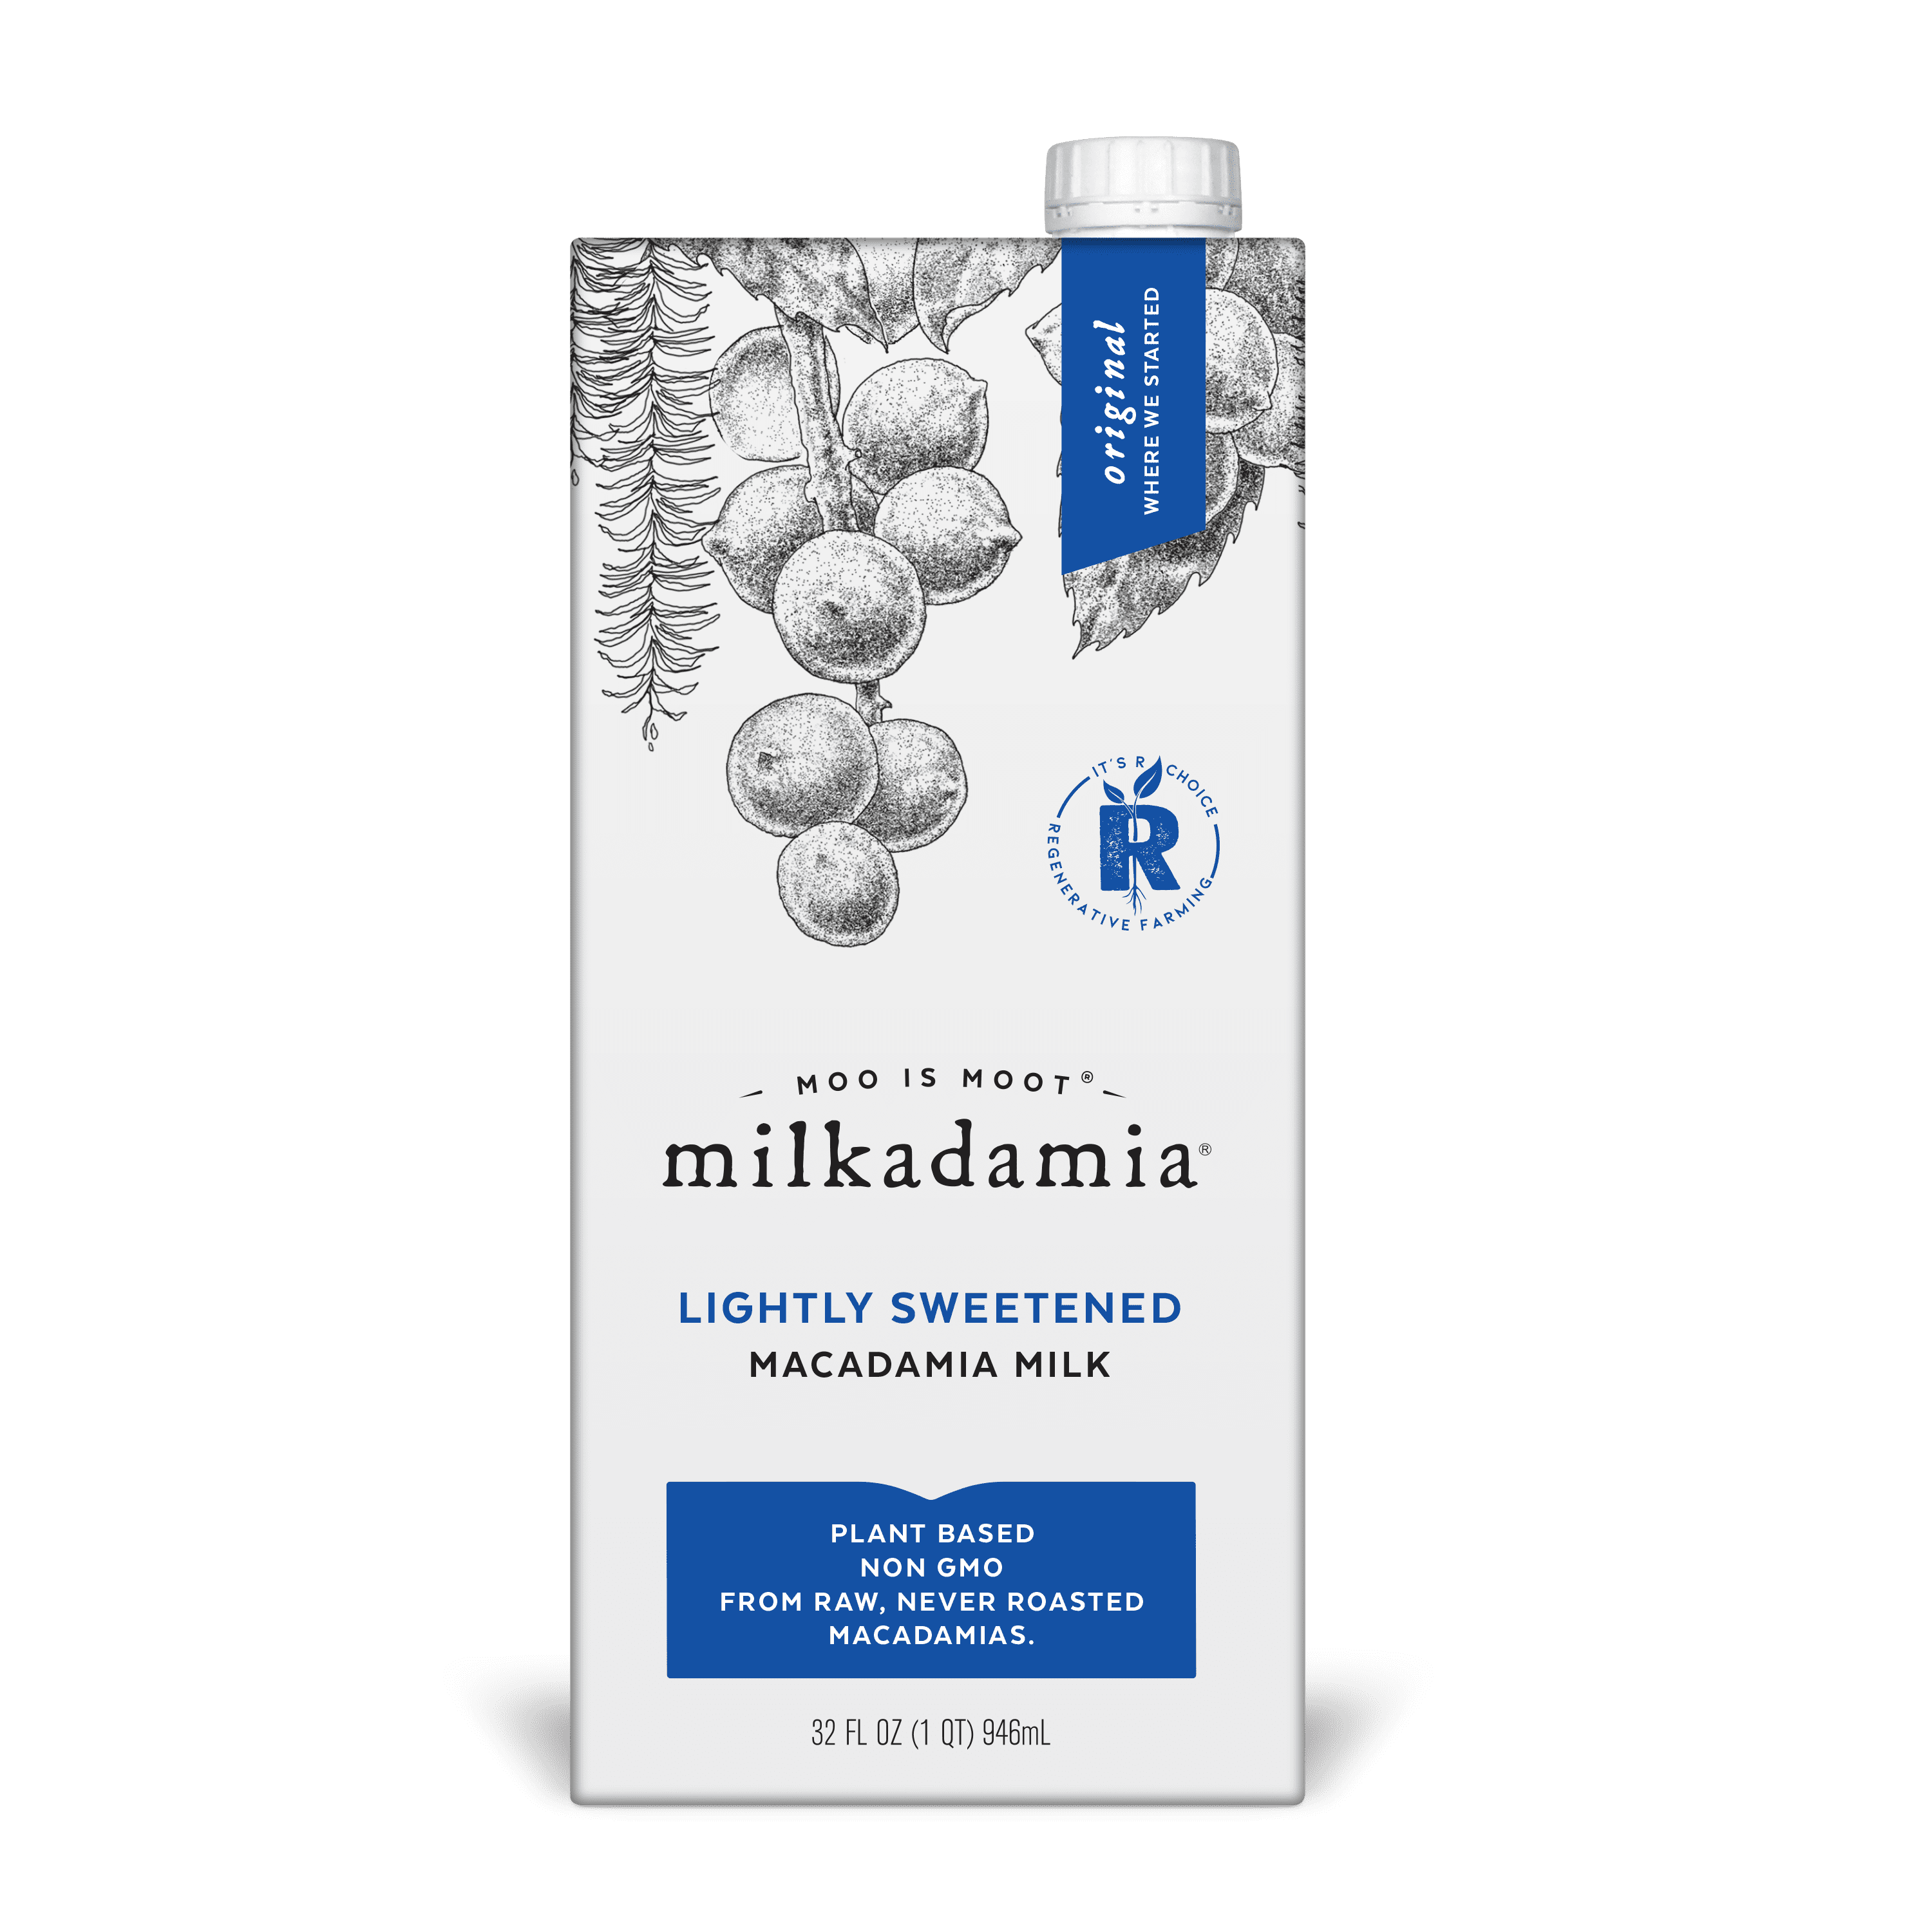 Milkadamia Macadamia Milk Original Lightly Sweetened 6 units per case 32.0 fl